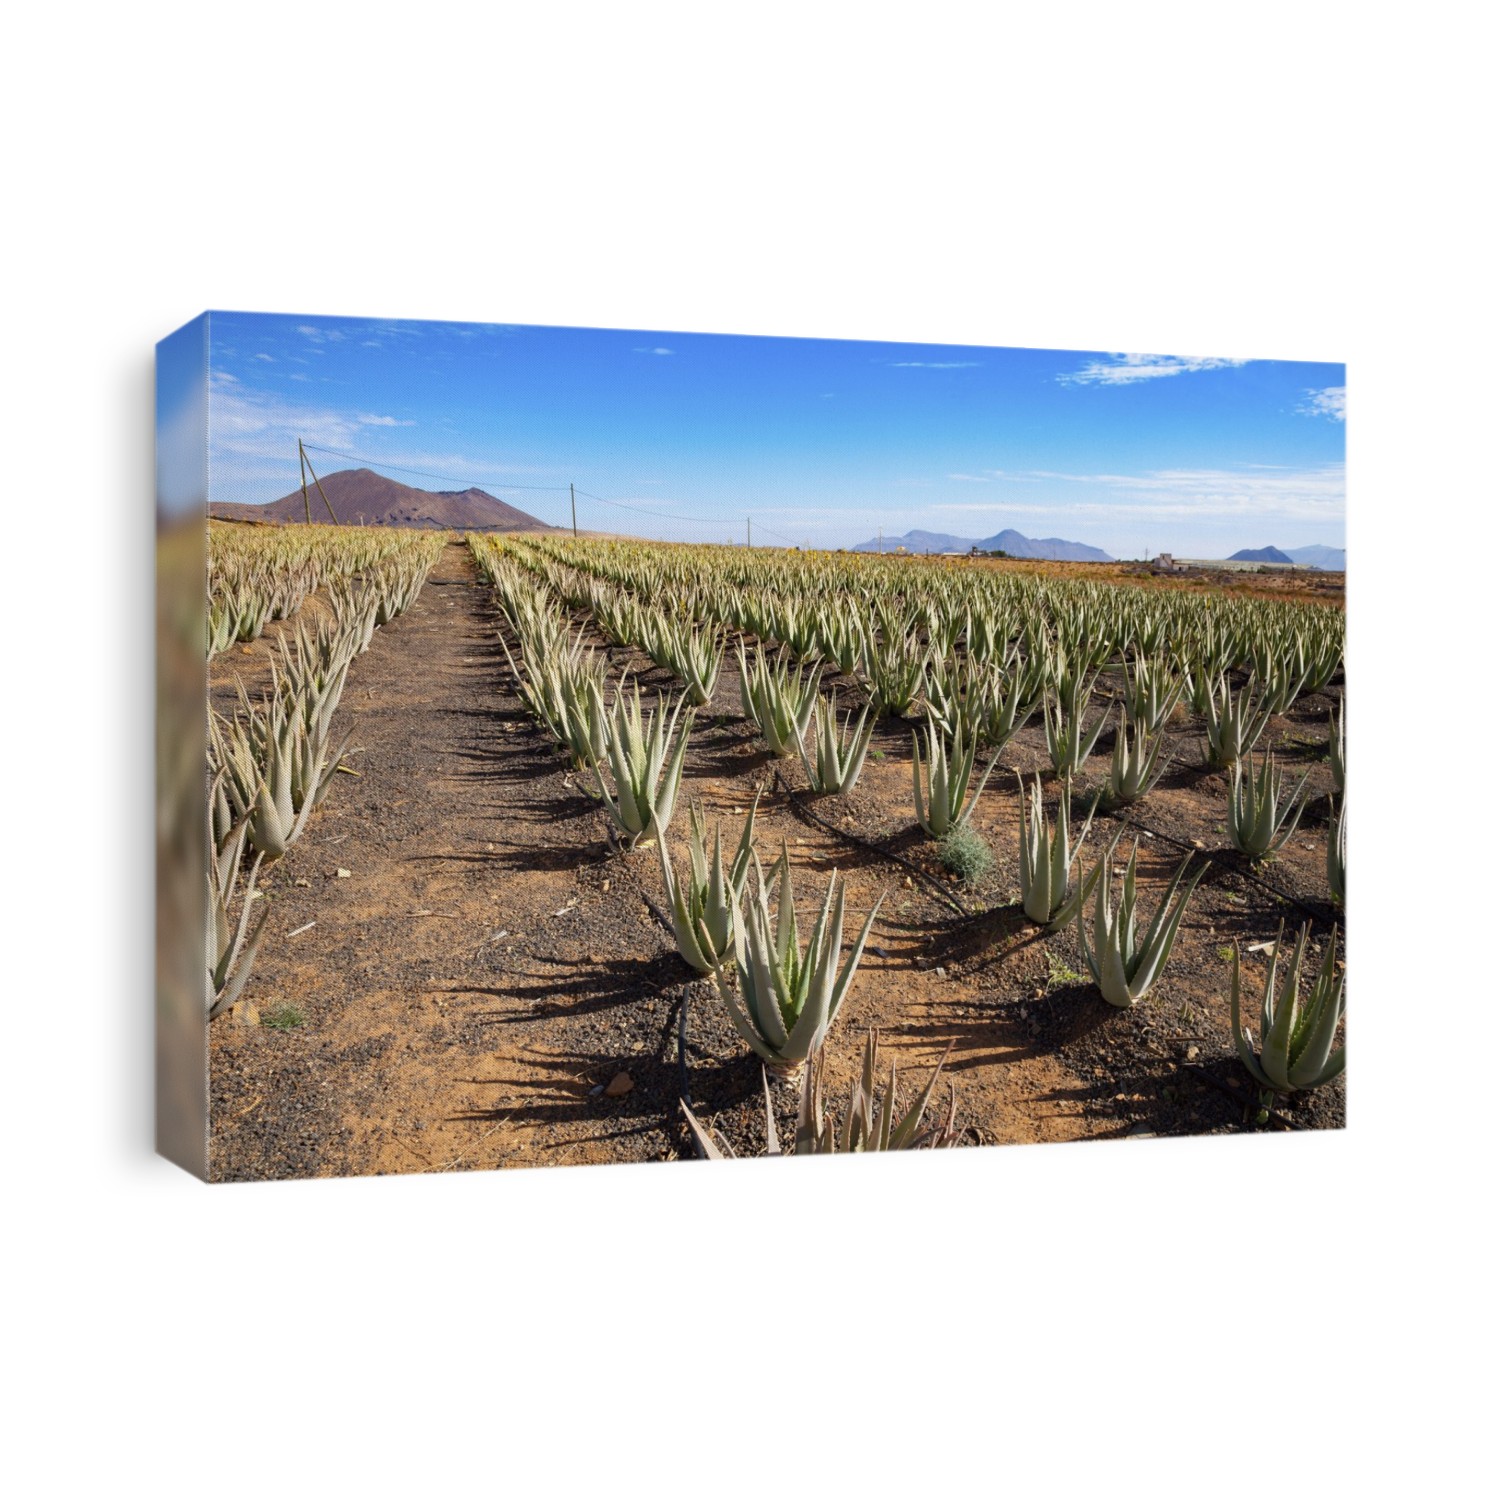 Aloe vera plants, Fuerteventura, Canary Islands.